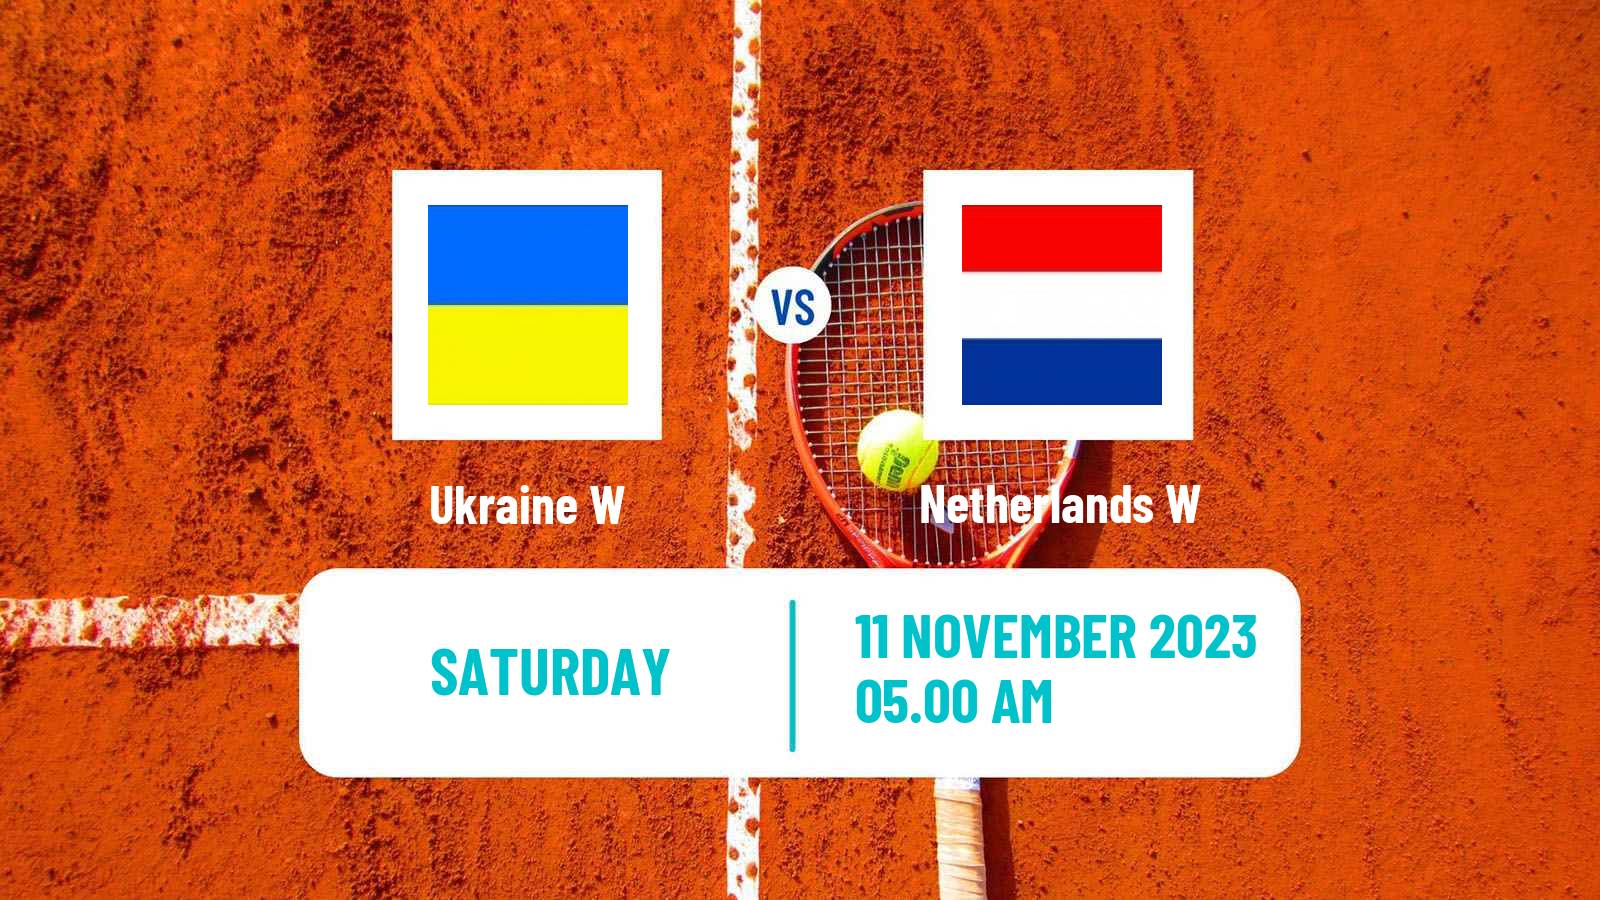 Tennis WTA Billie Jean King Cup World Group Teams Ukraine W - Netherlands W